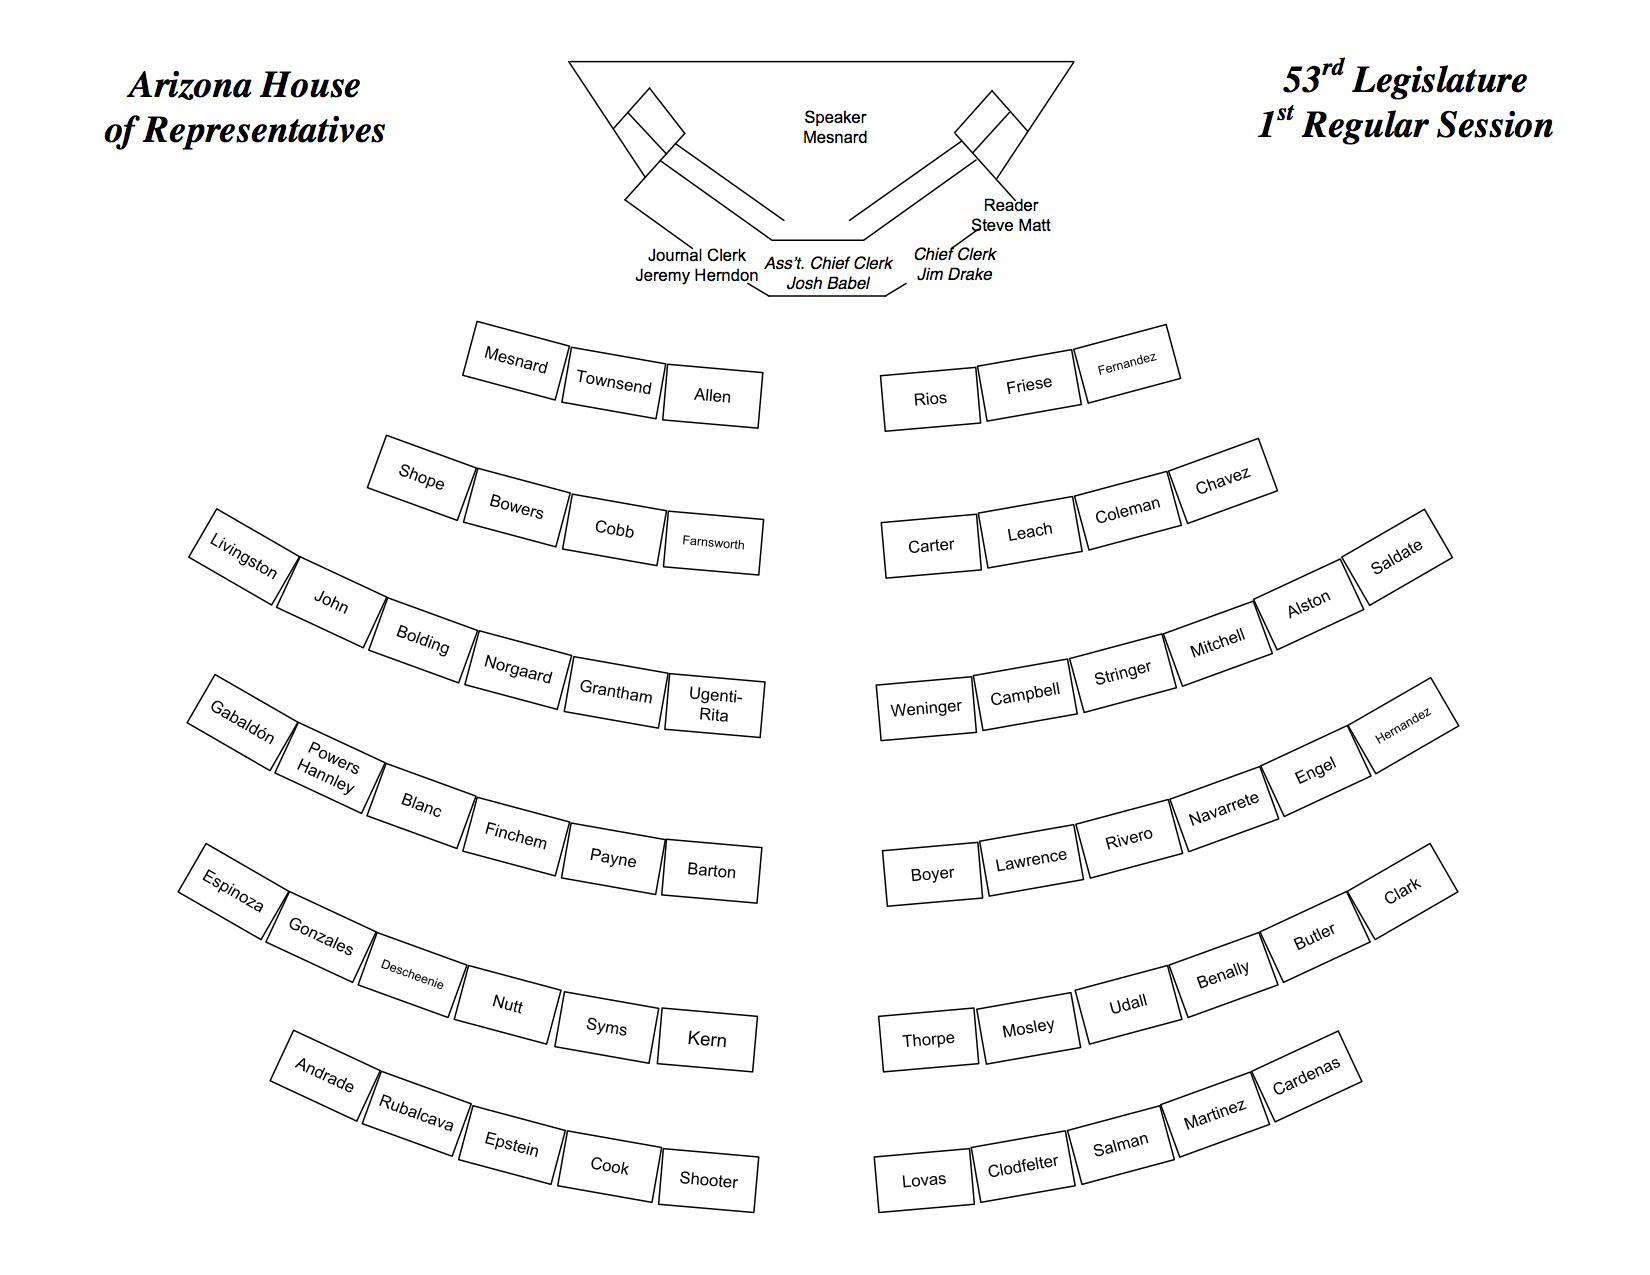 Senate Seating Chart